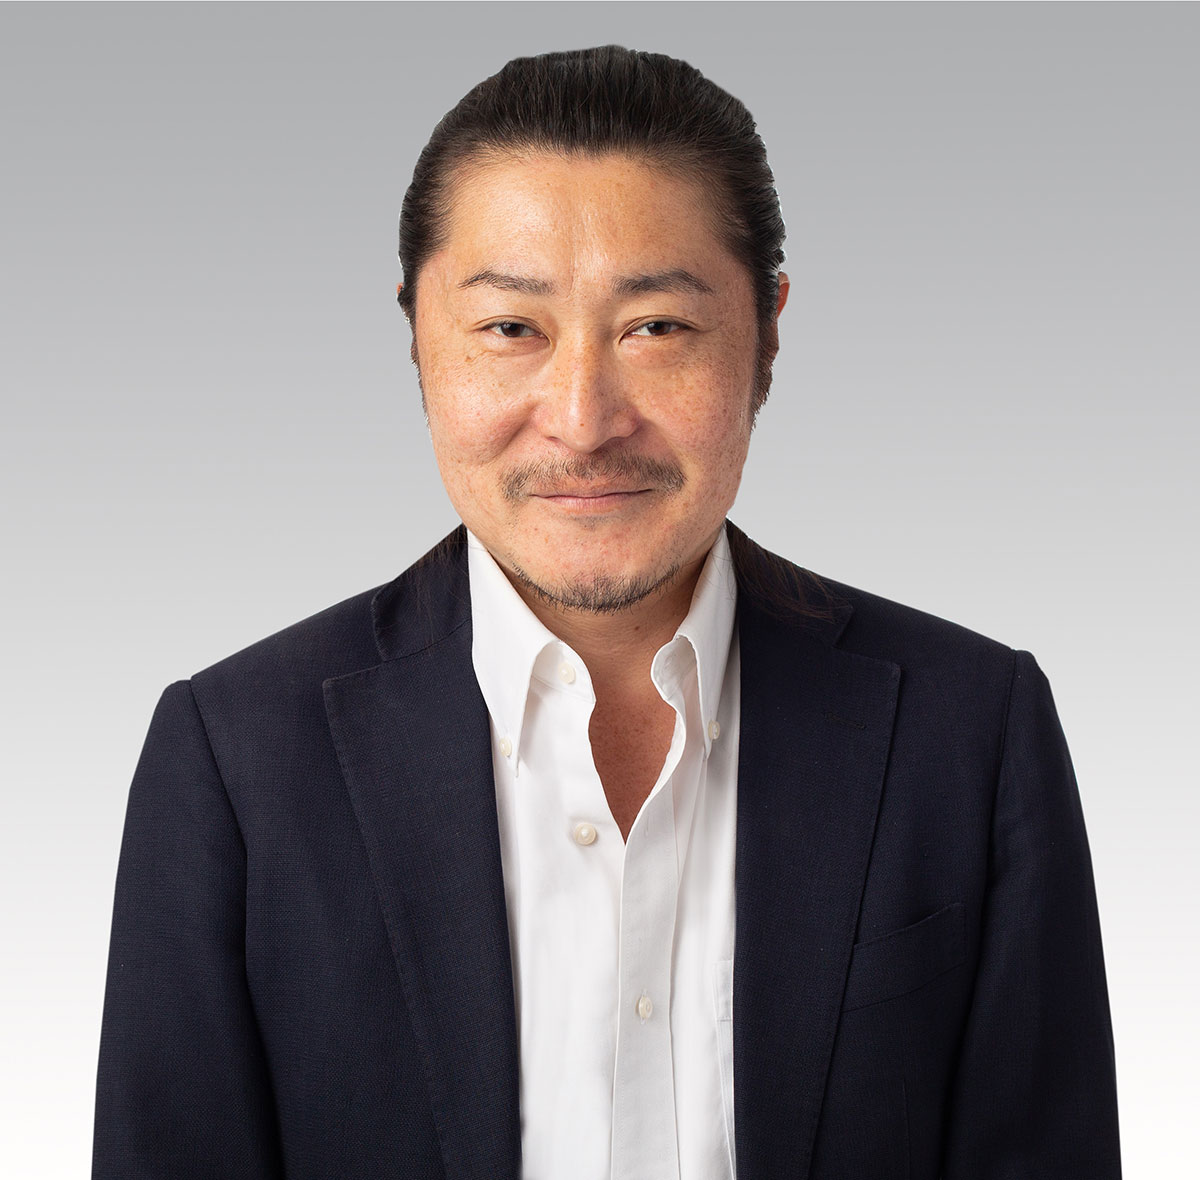 Go Maruyama - Senior Vice President, Administration - Leadership